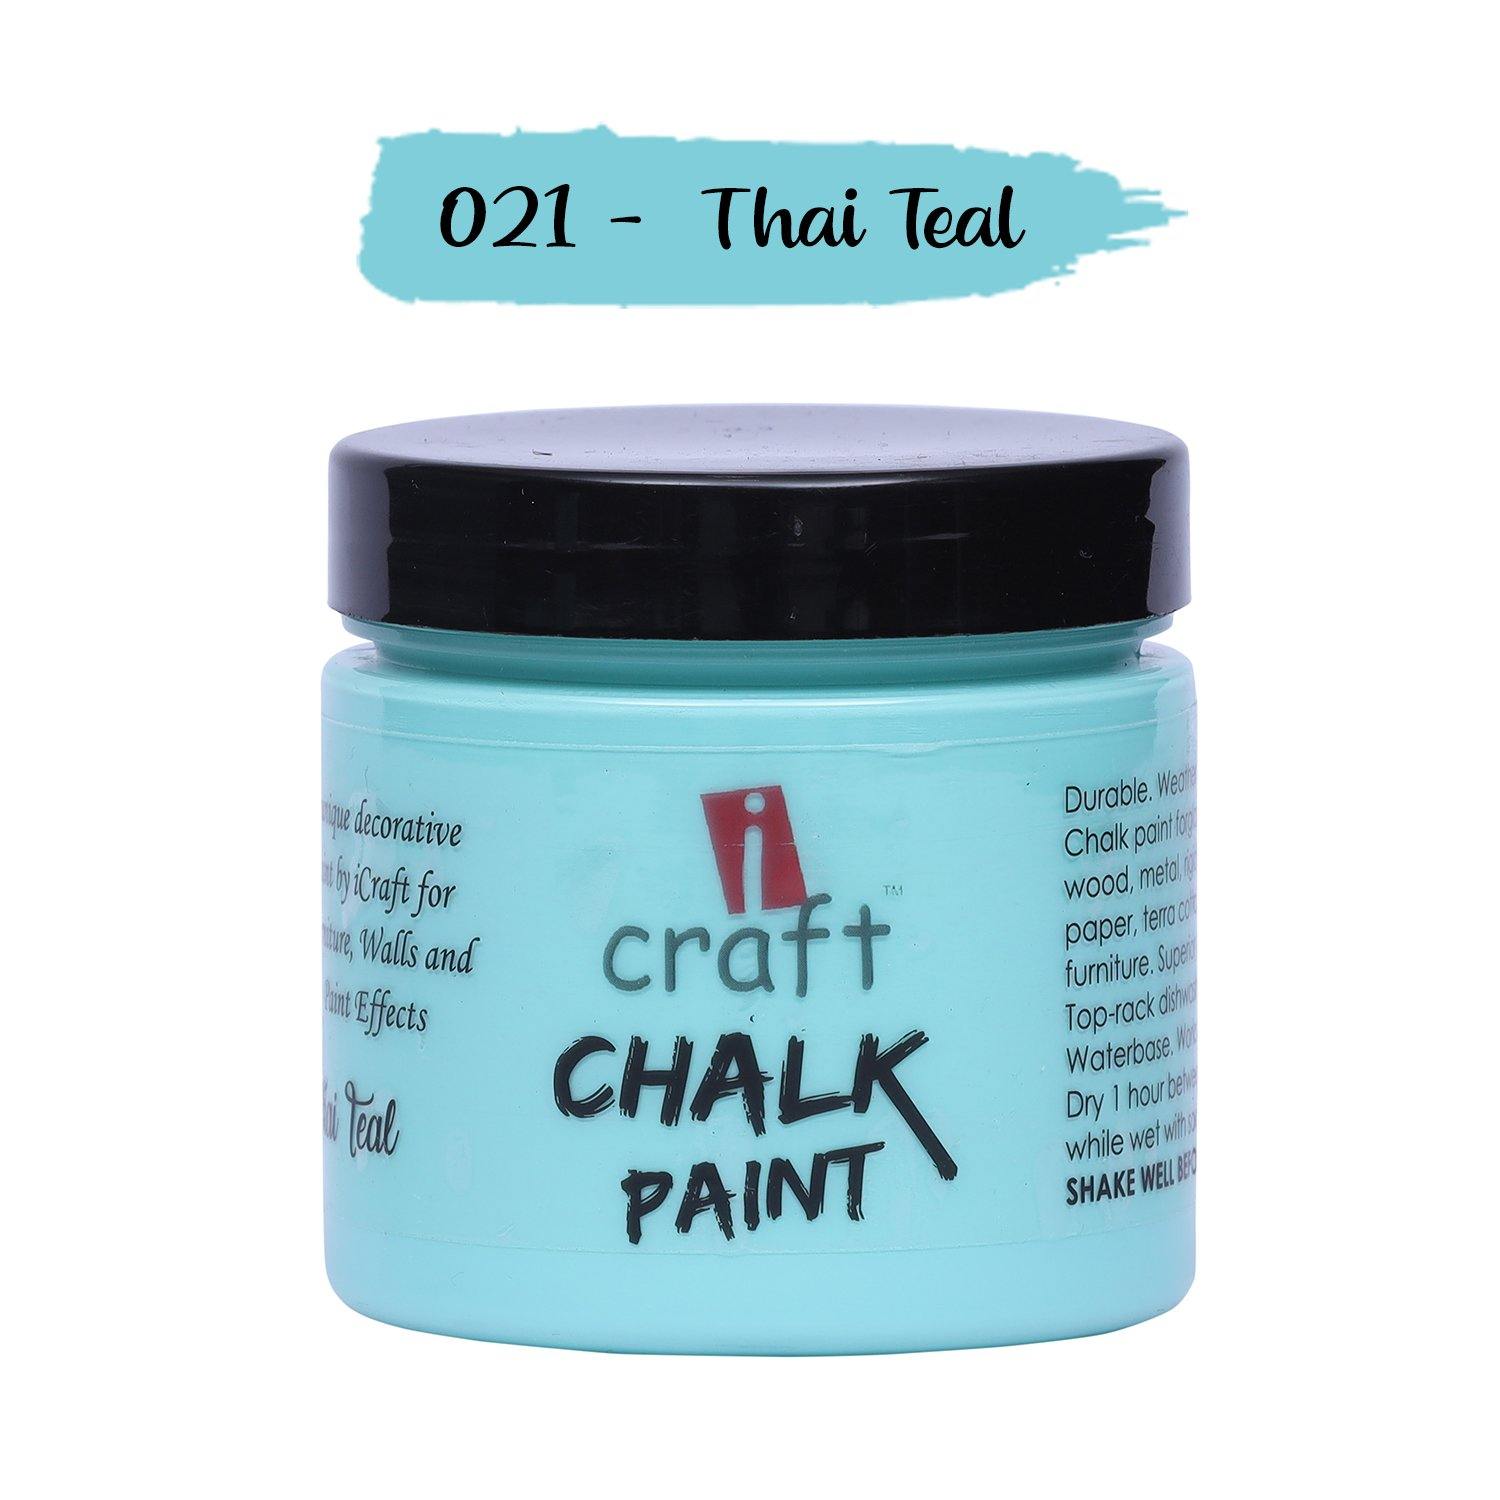 Chalk Paint - 21 (Thai Teal) - Growing Craft - Best craft Supplies